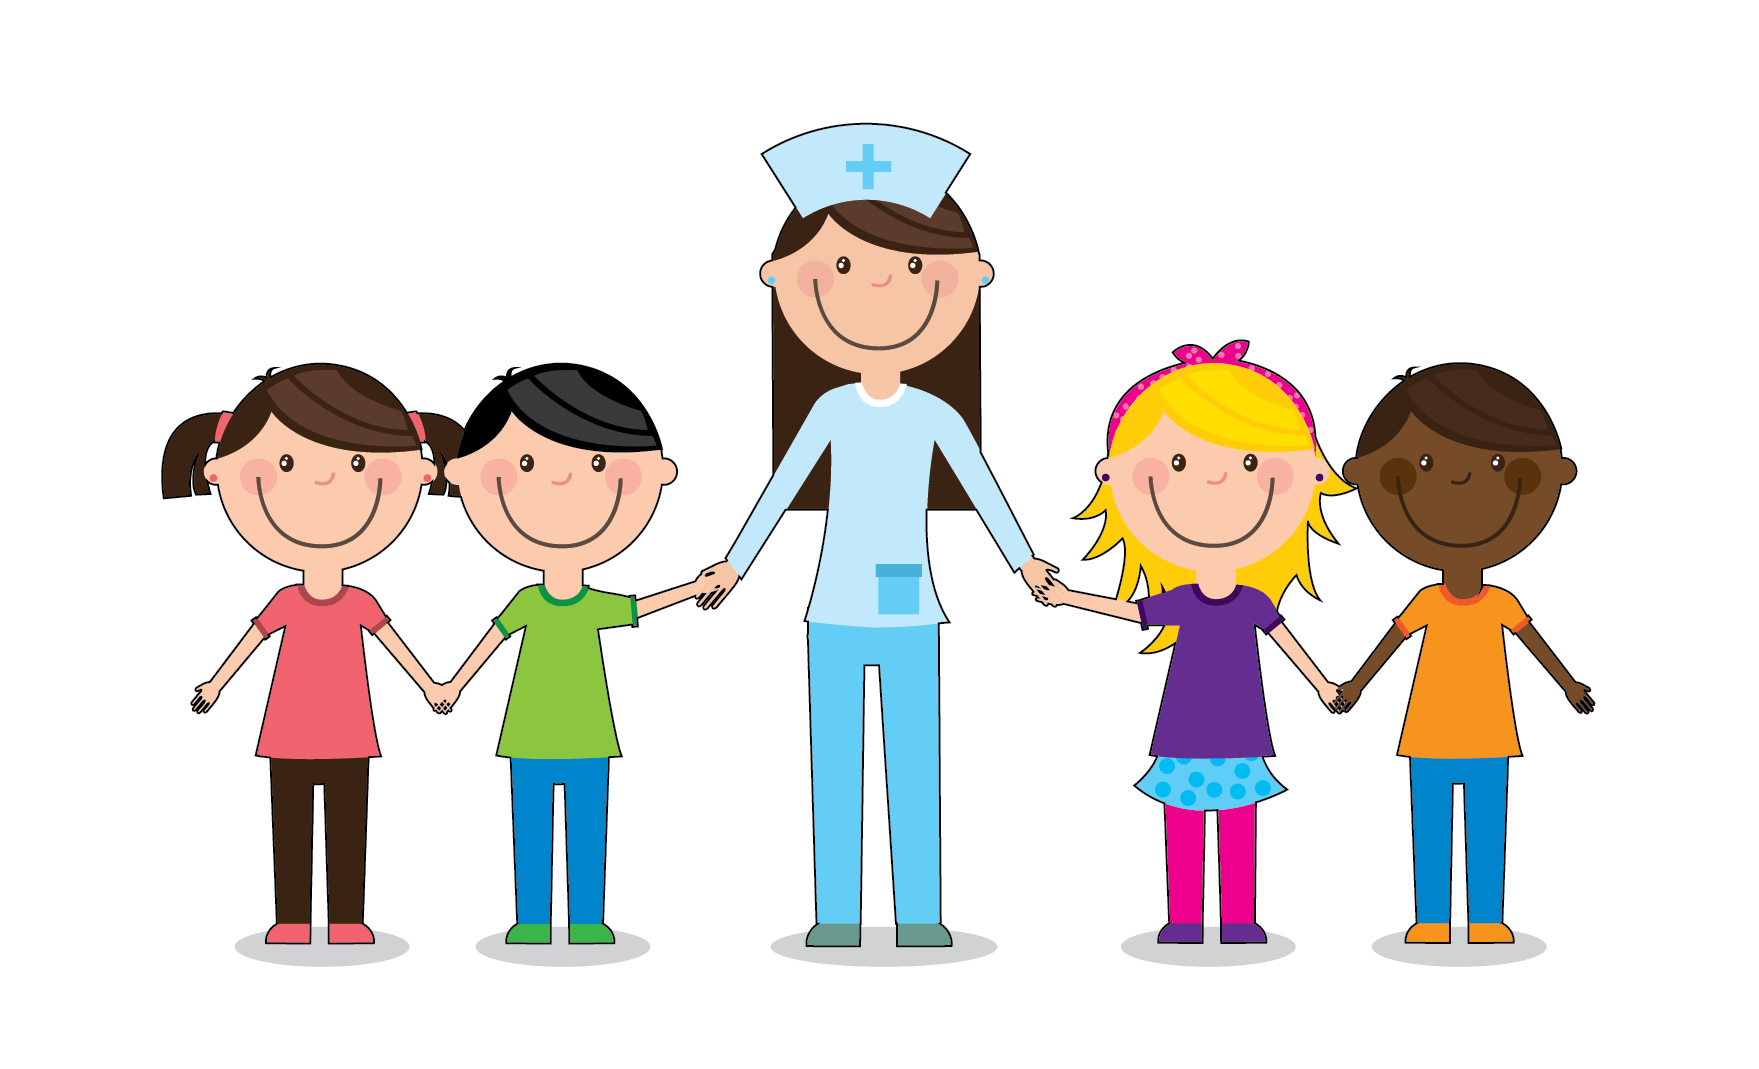 Cartoon image of 4 kids and a nurse